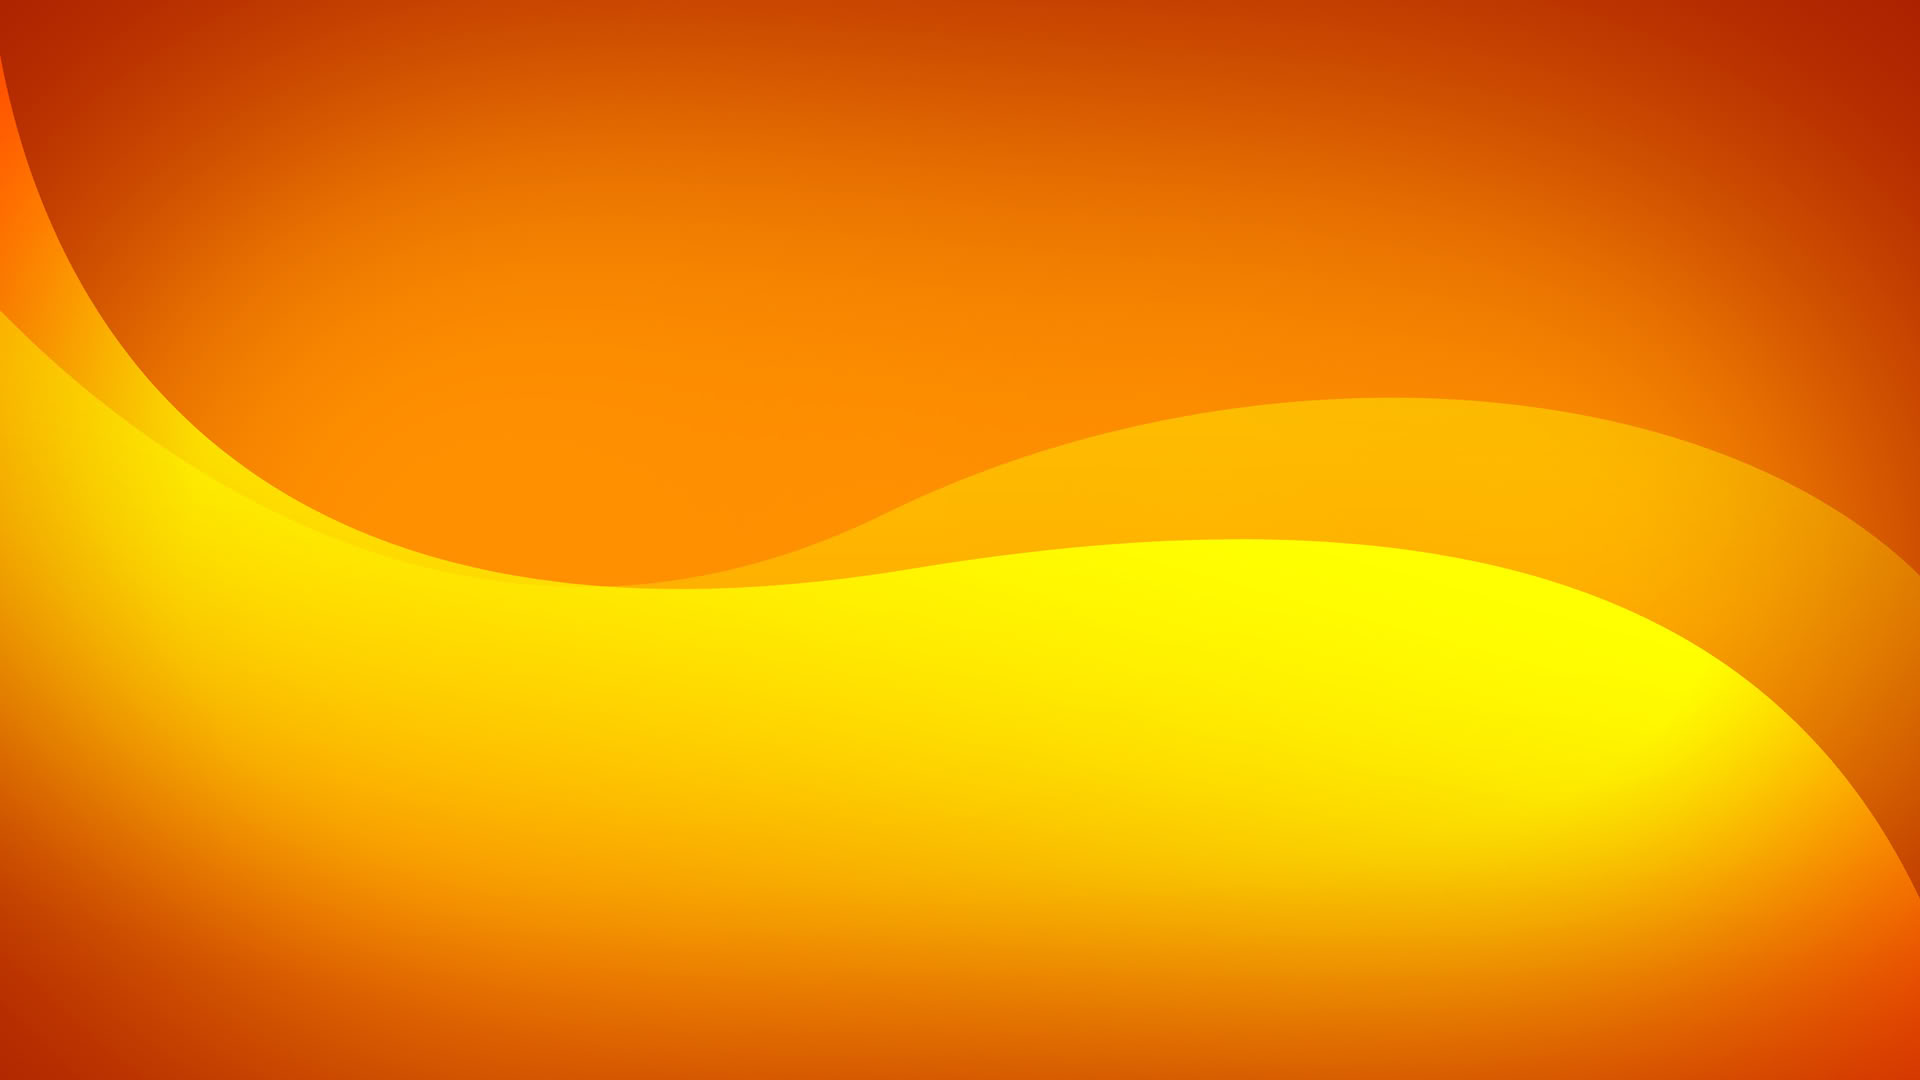 Cool Orange Background Designs – Design & art